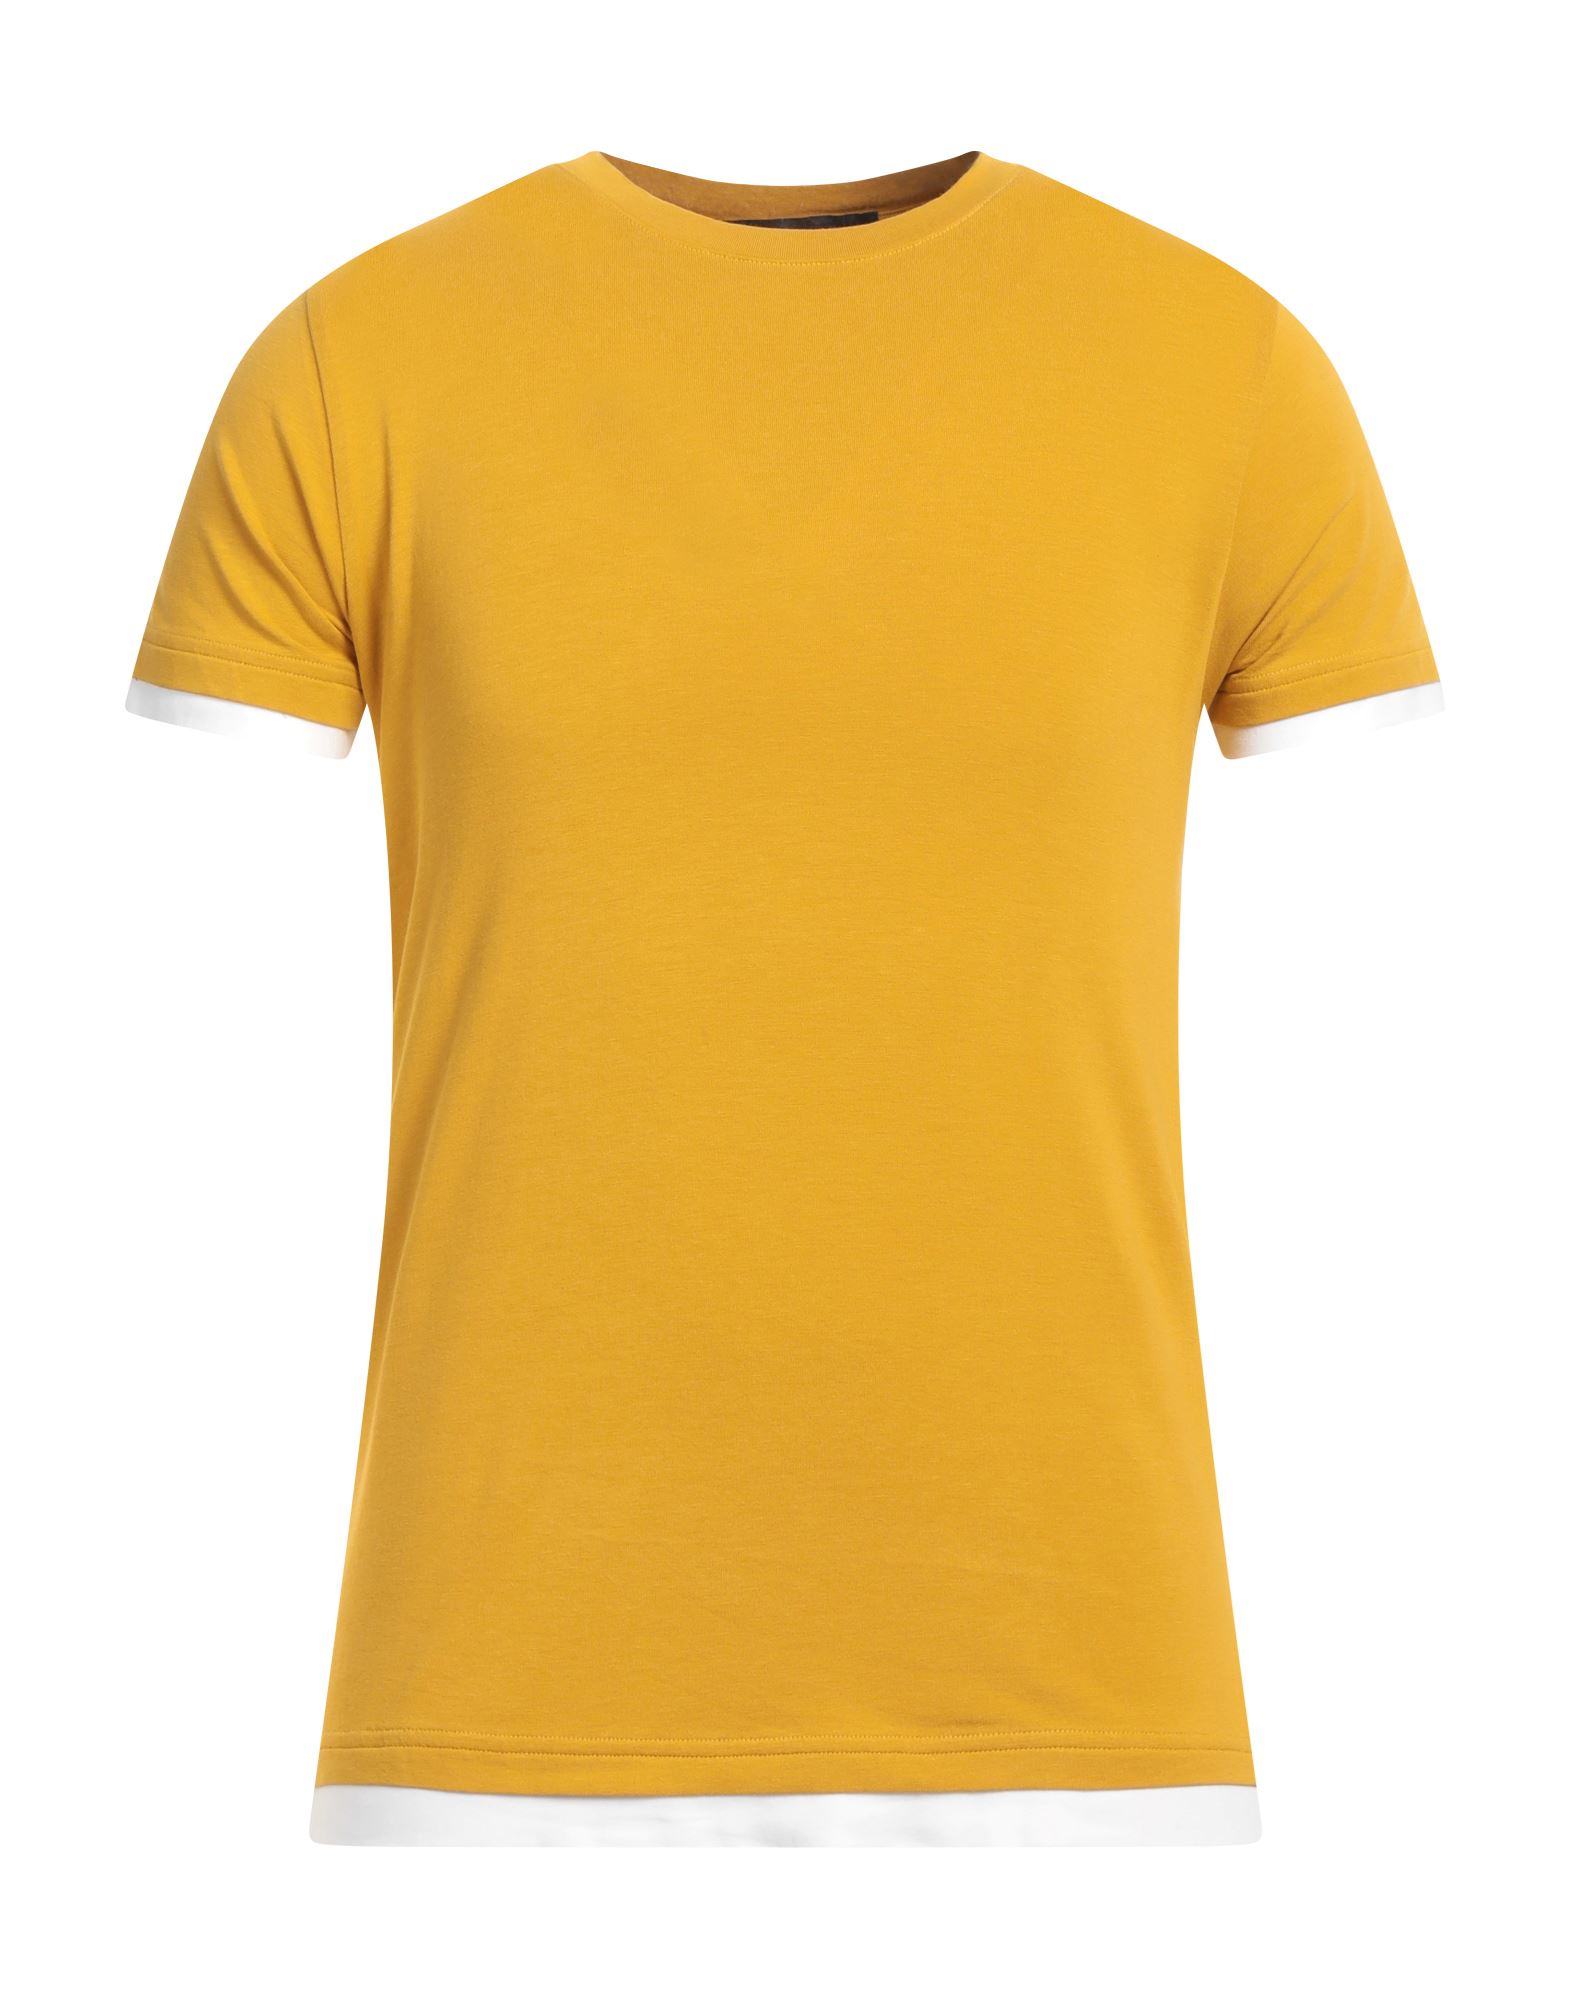 Jeordie's Man T-shirt Mustard Size Xl Cotton, Elastane In Yellow